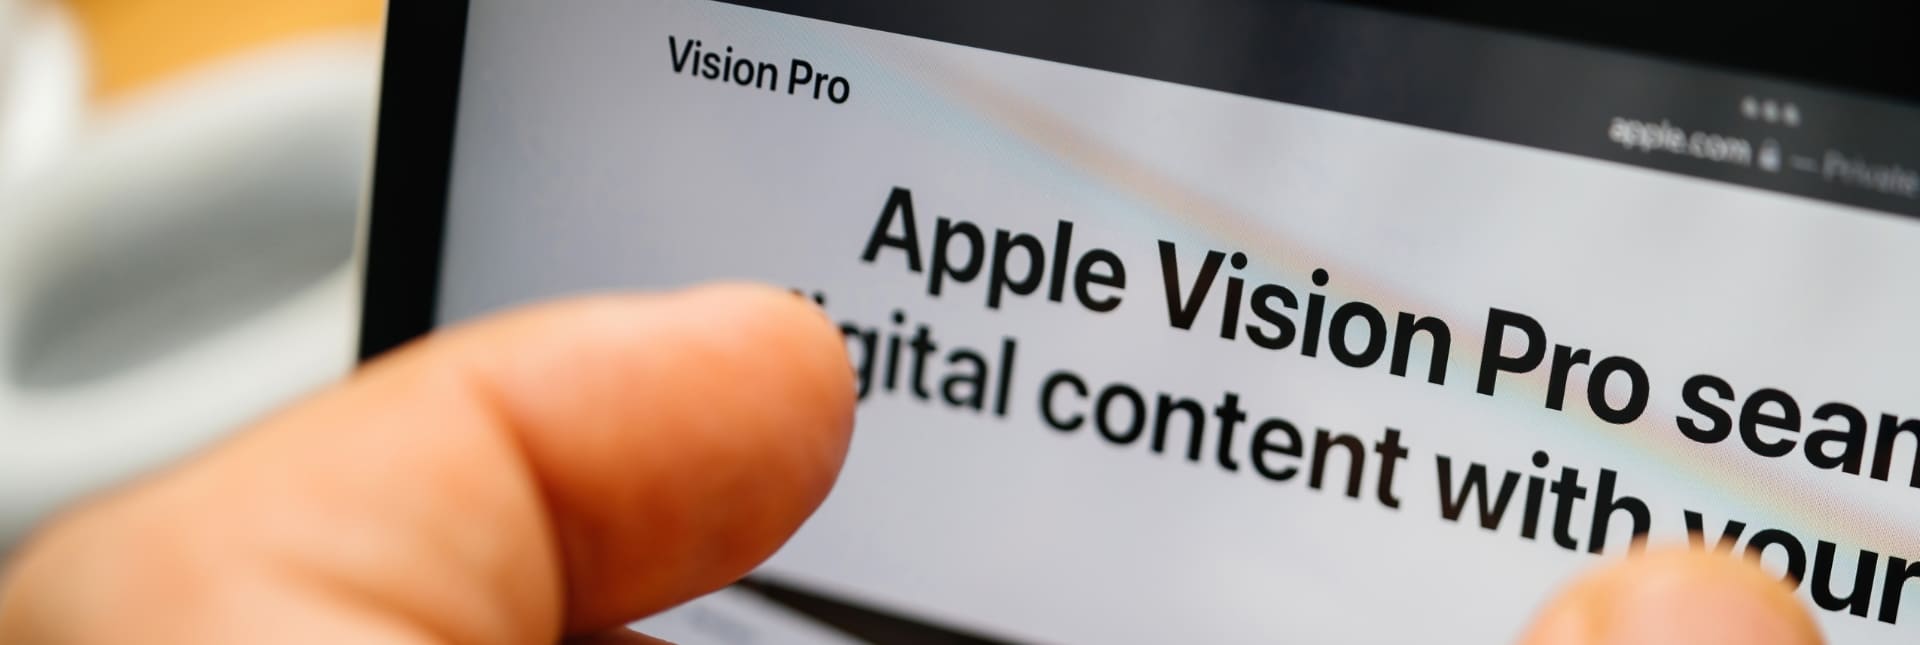 Apple Vision Pro ‘EyeSight’ External Display Revealed